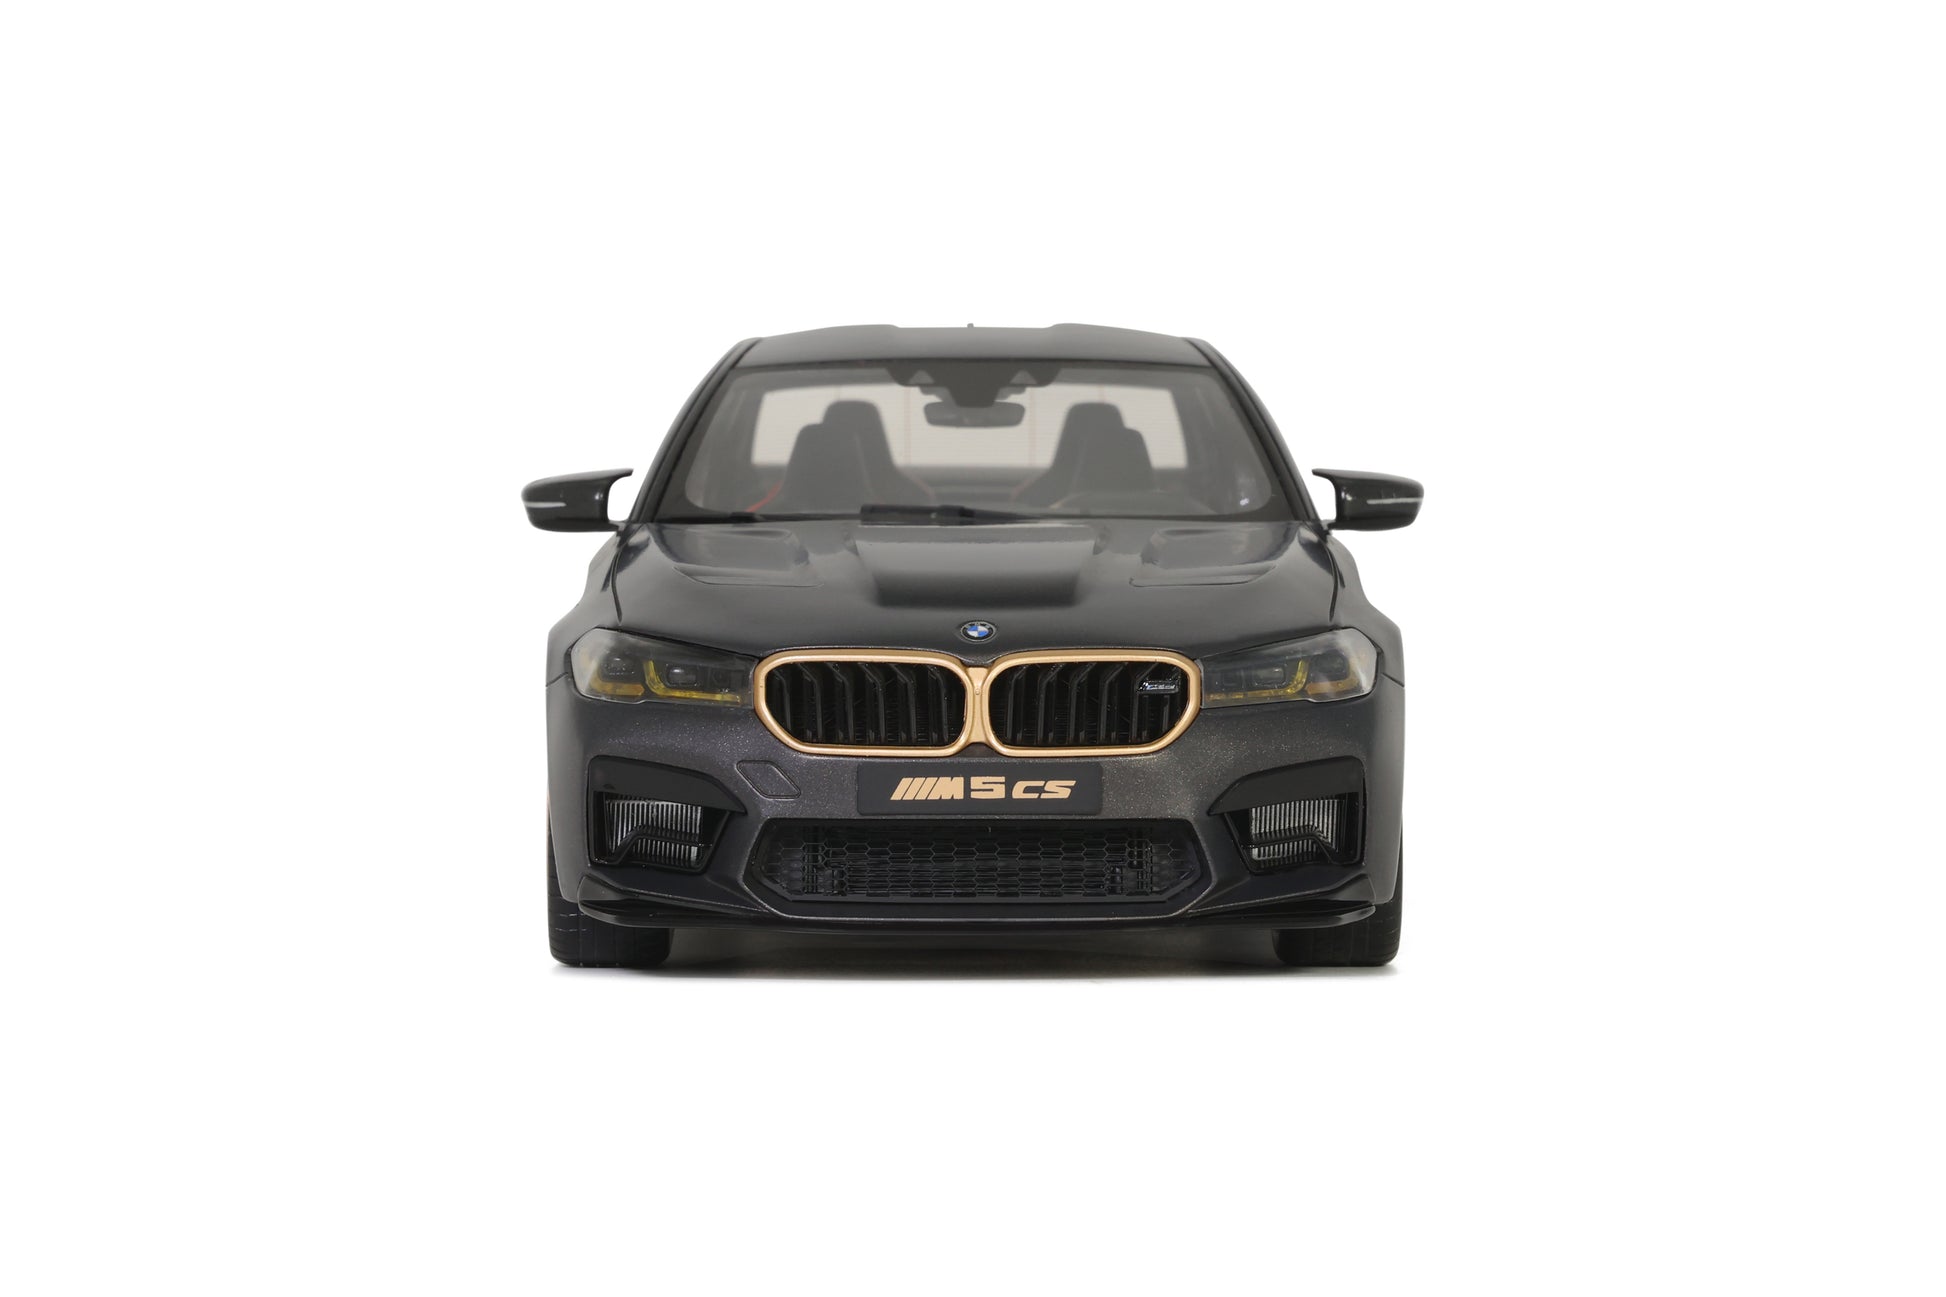 GT SPIRIT 1/18 - BMW M5 CS (F90) - 2021